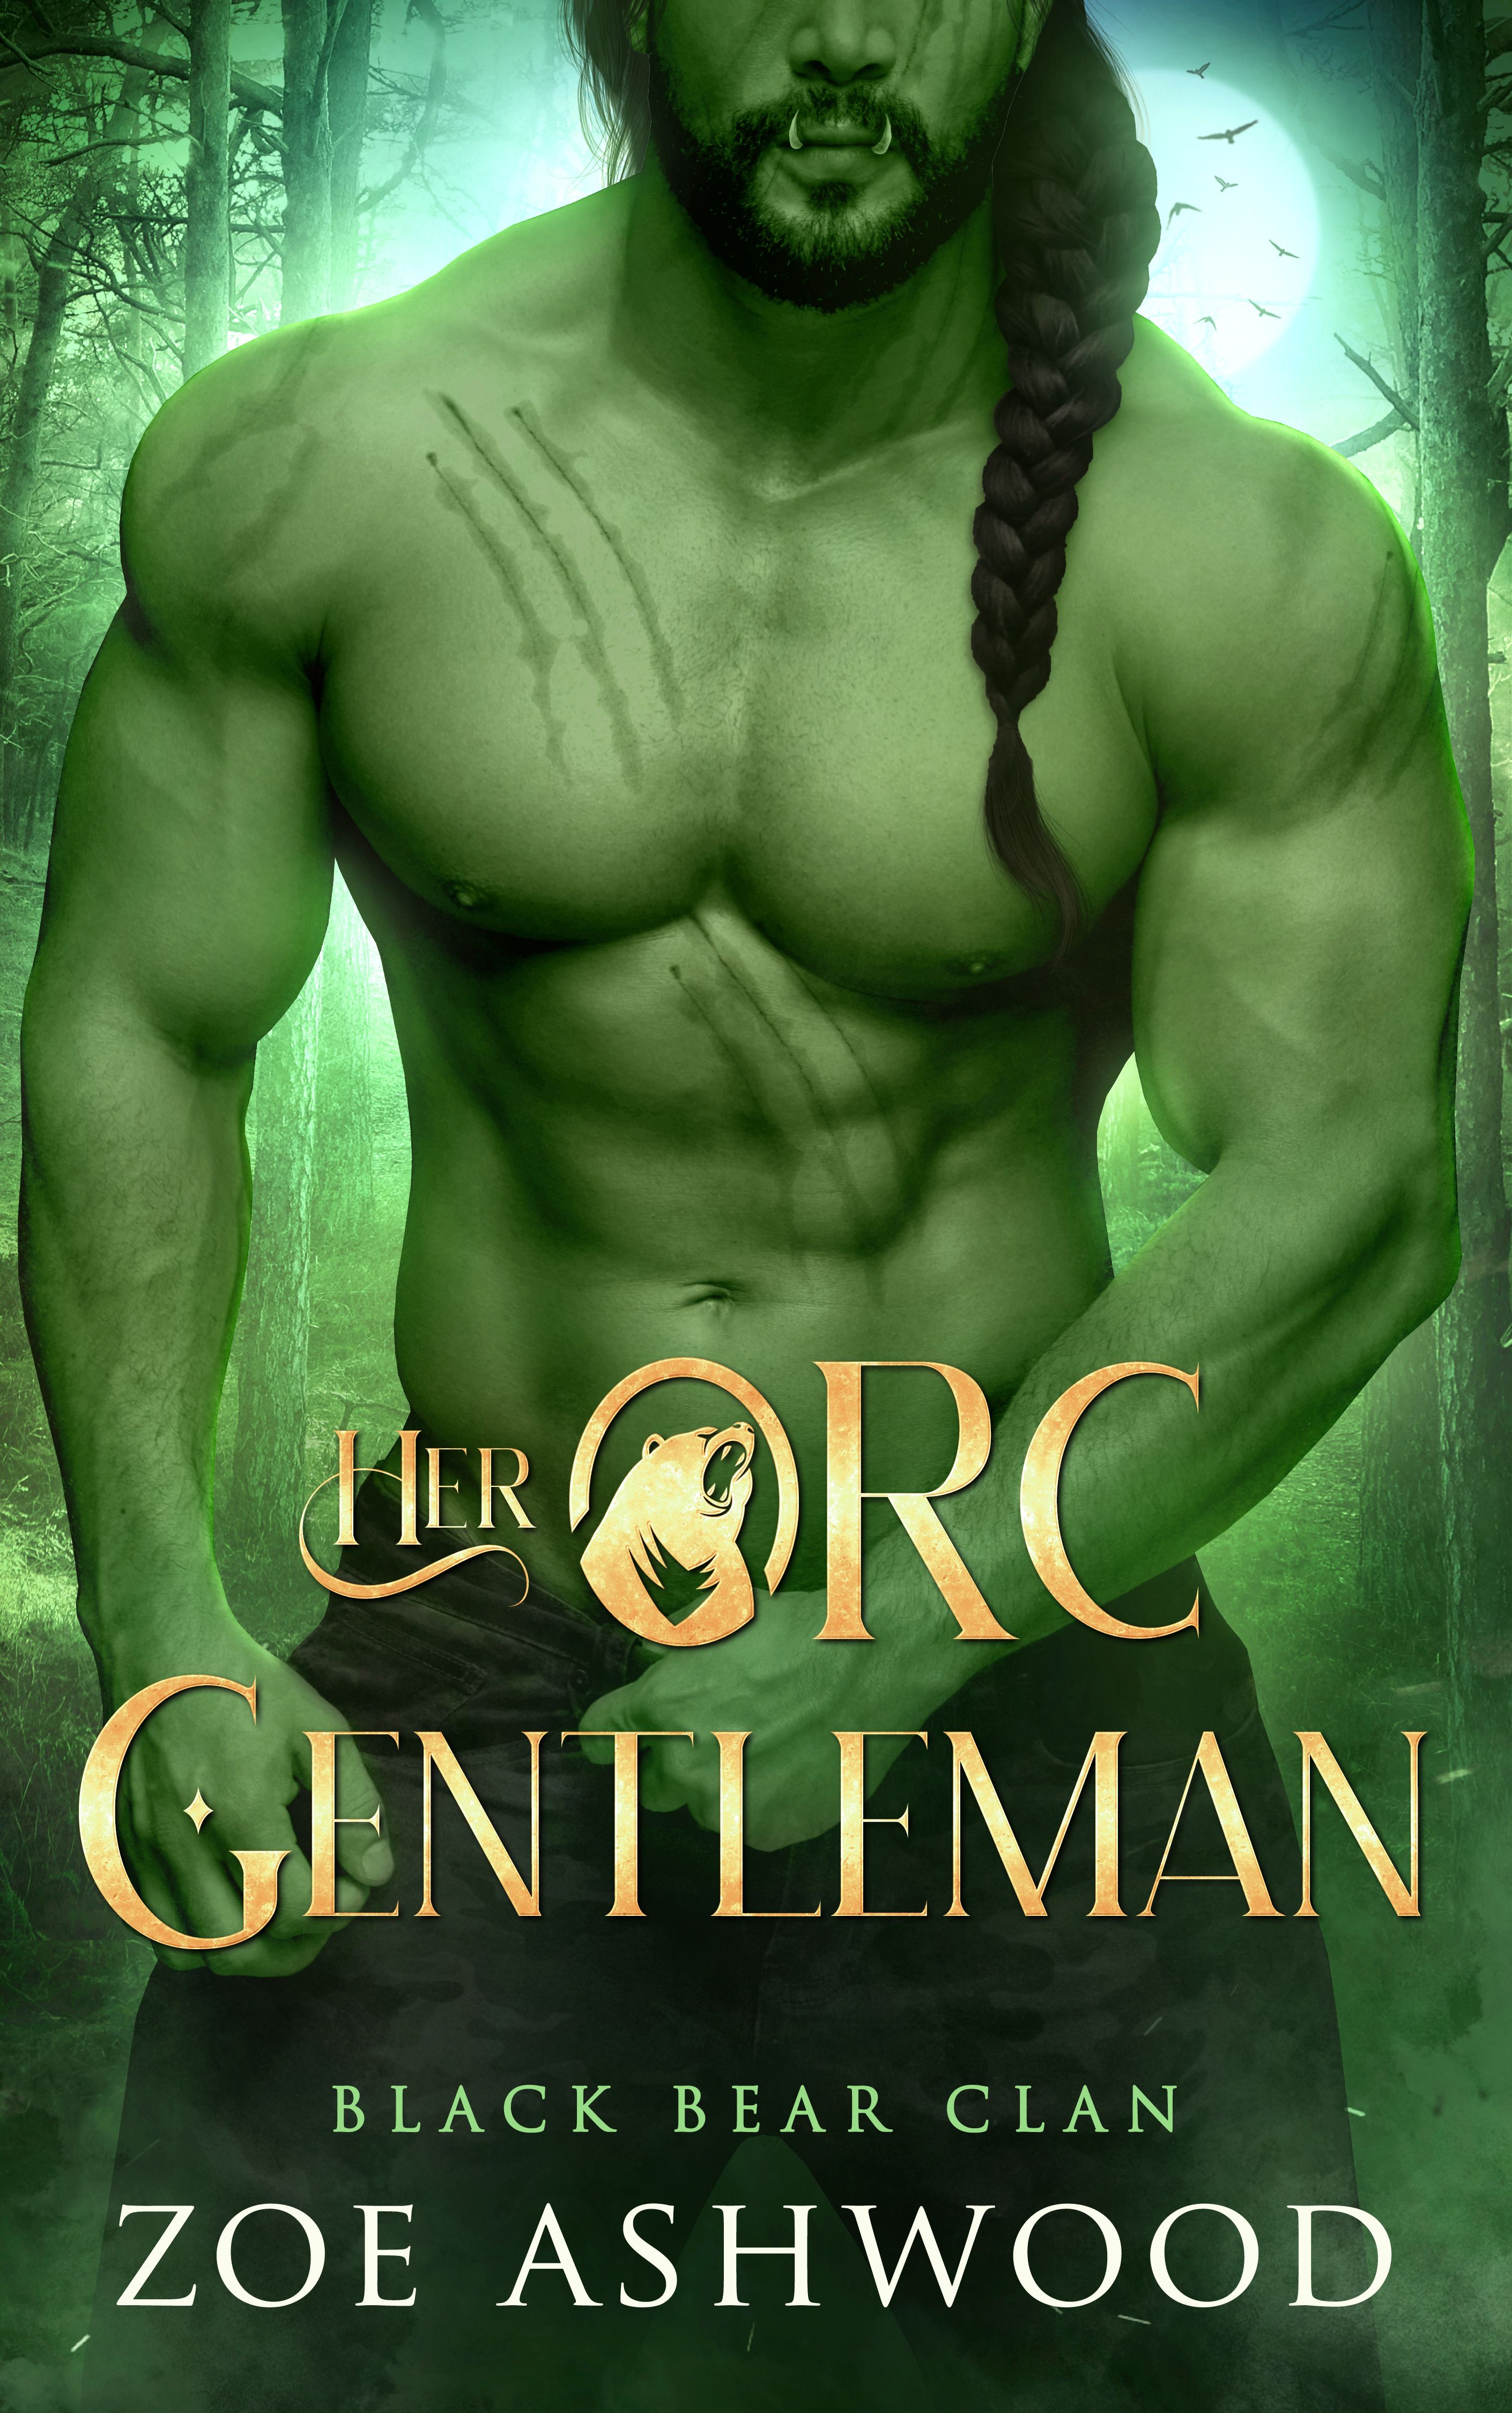 Her Orc Gentleman by Zoe Ashwood